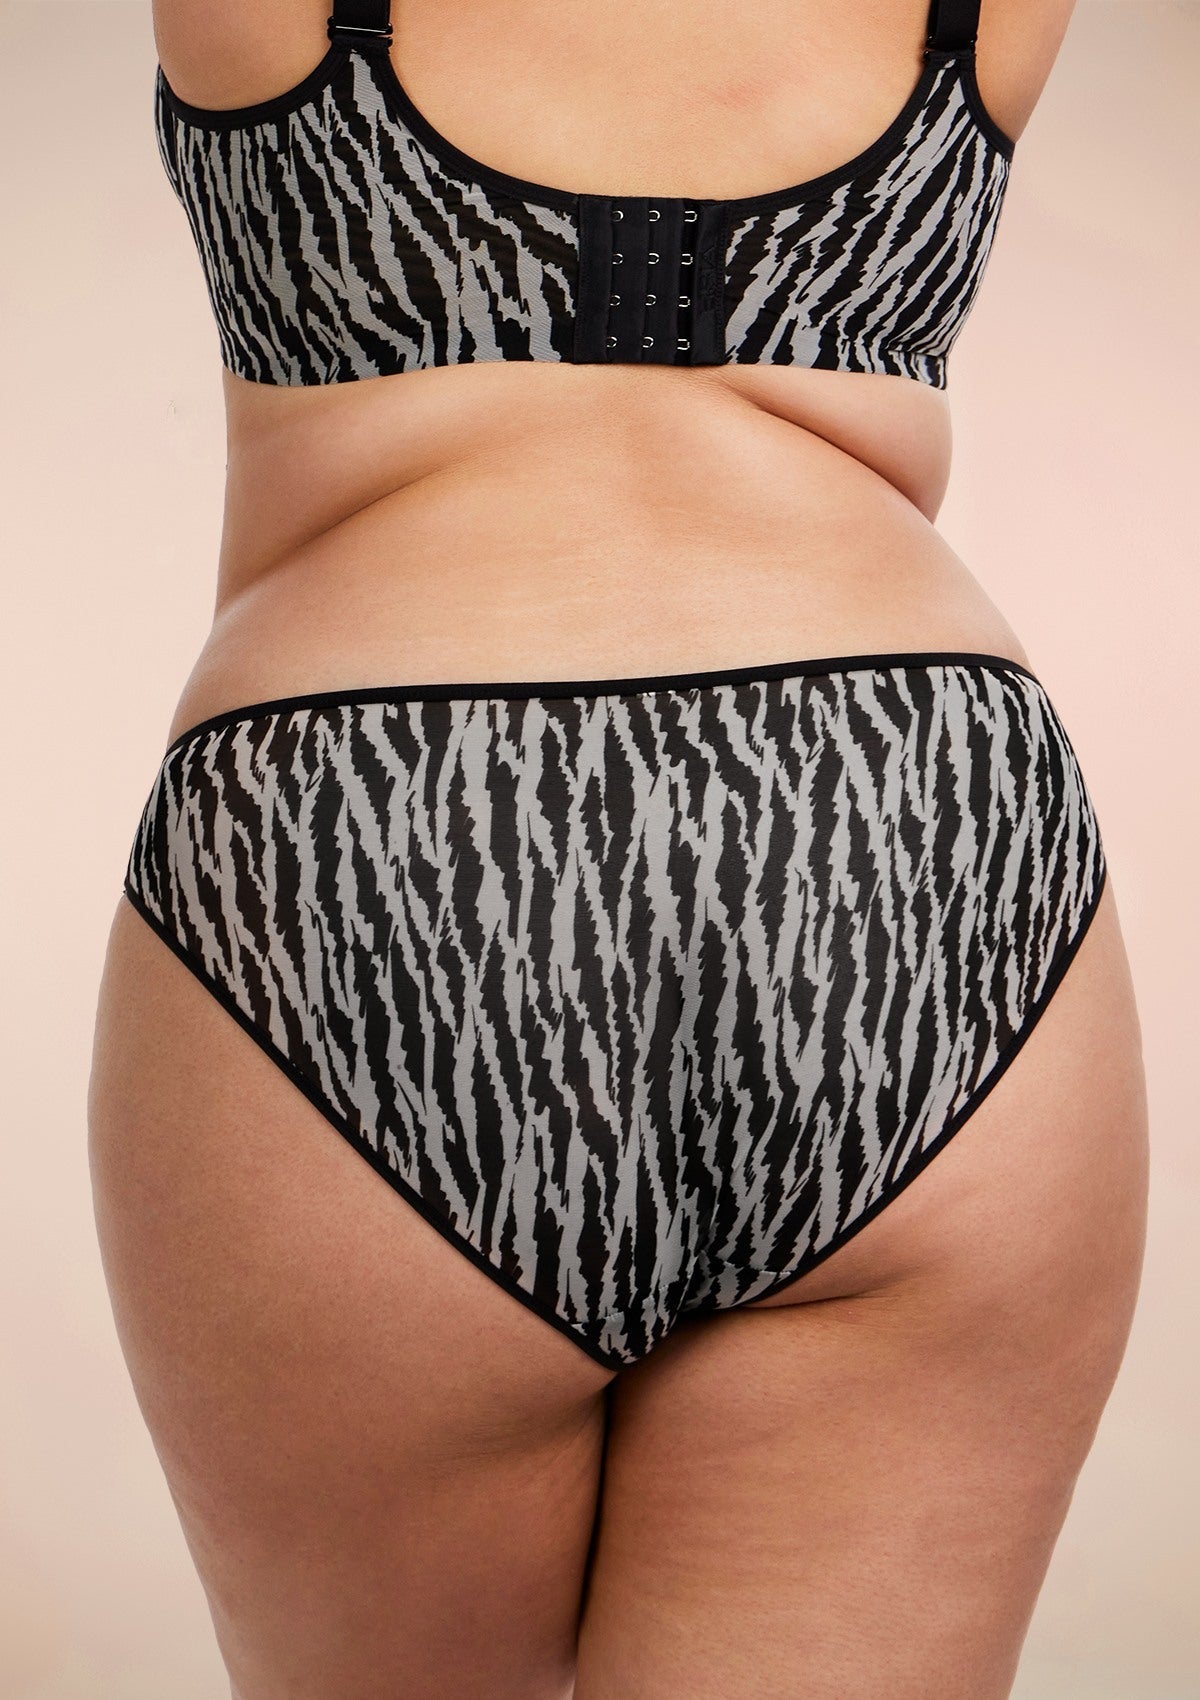 HSIA Breathable Sexy Feminine Lace Mesh Bikini Underwear - XL / Black